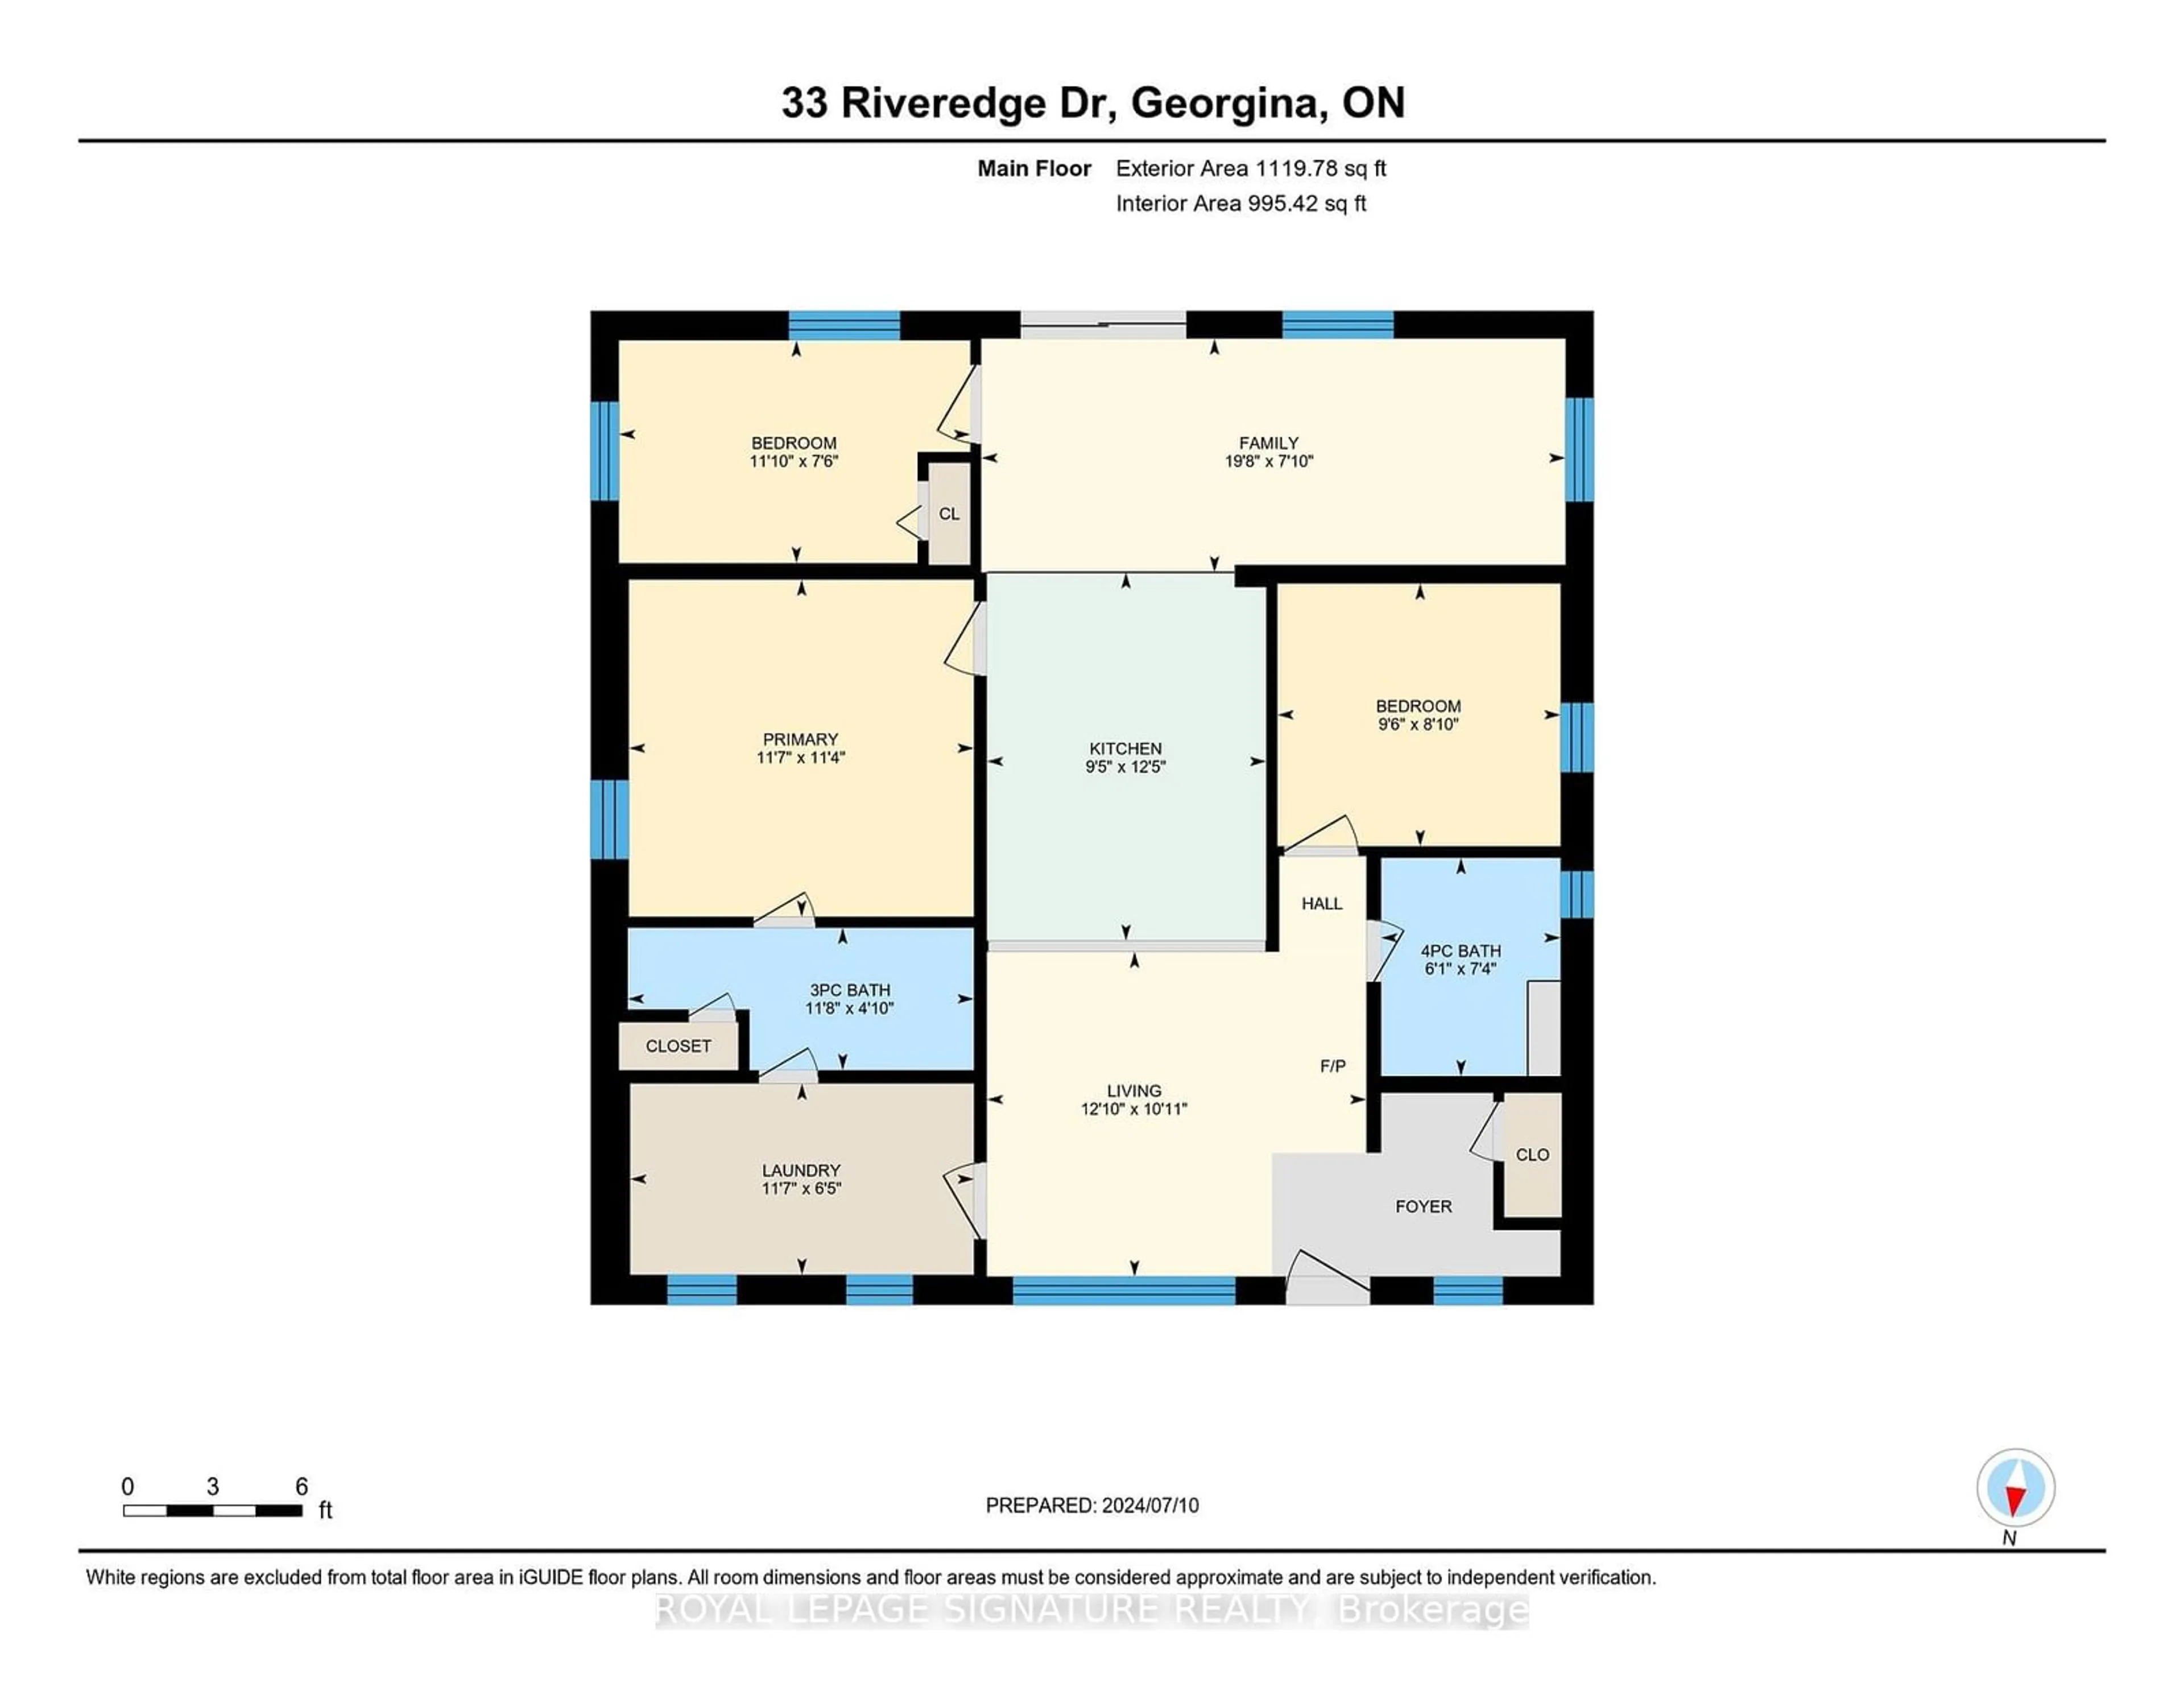 Floor plan for 33 Riveredge Dr, Georgina Ontario L4P 2N8